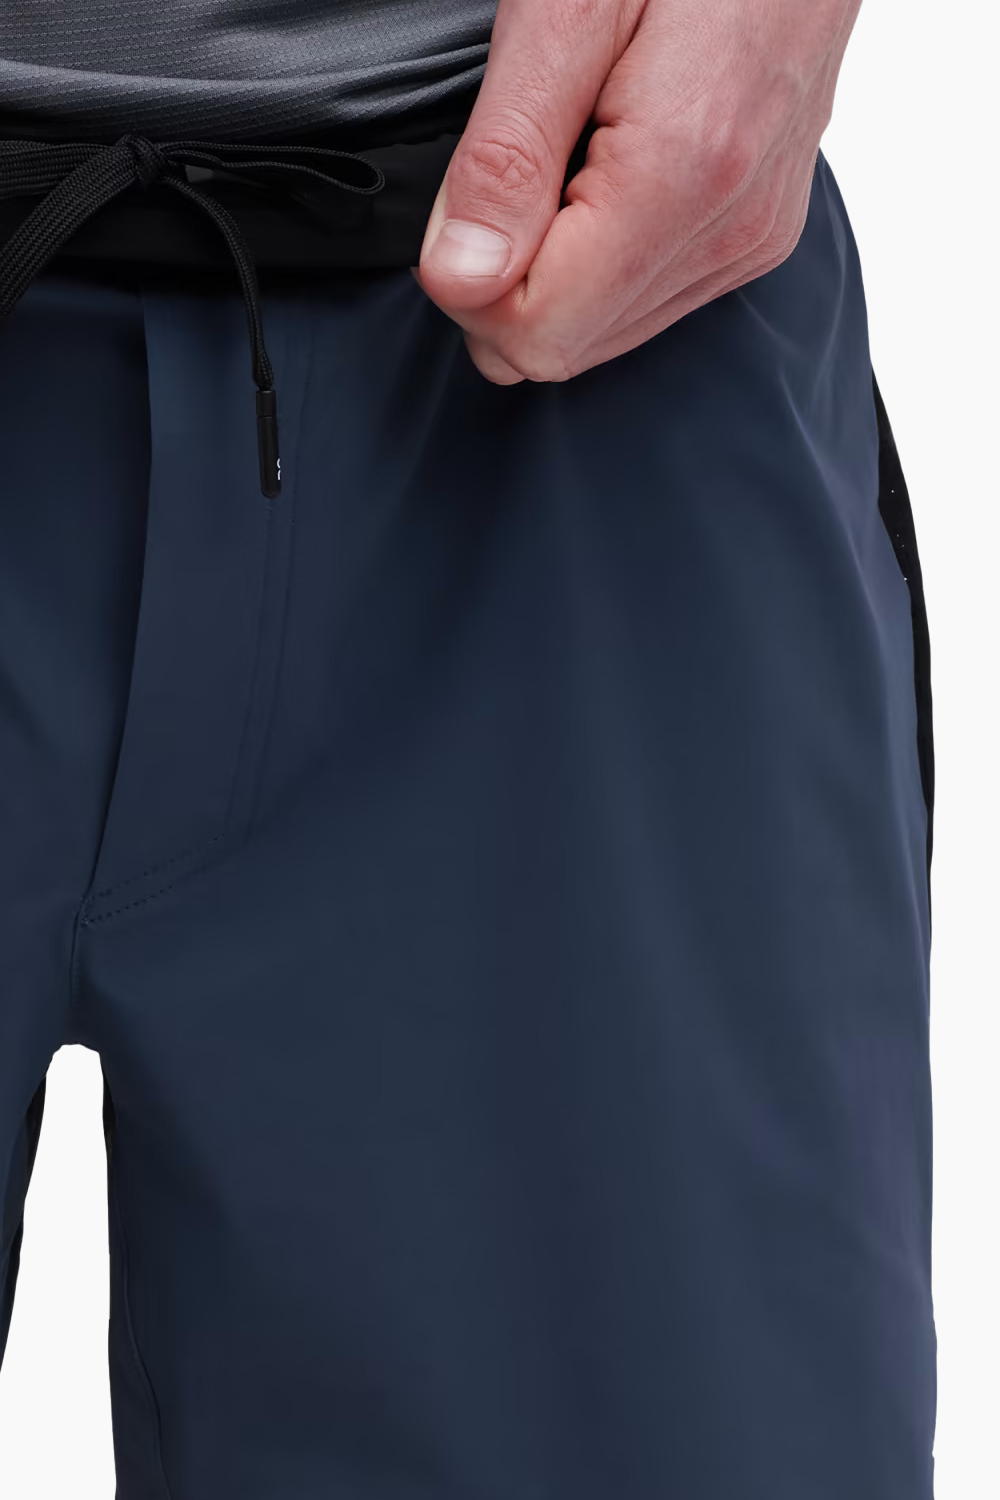 ON | Men's 5" Lightweight Shorts in Denim/Black